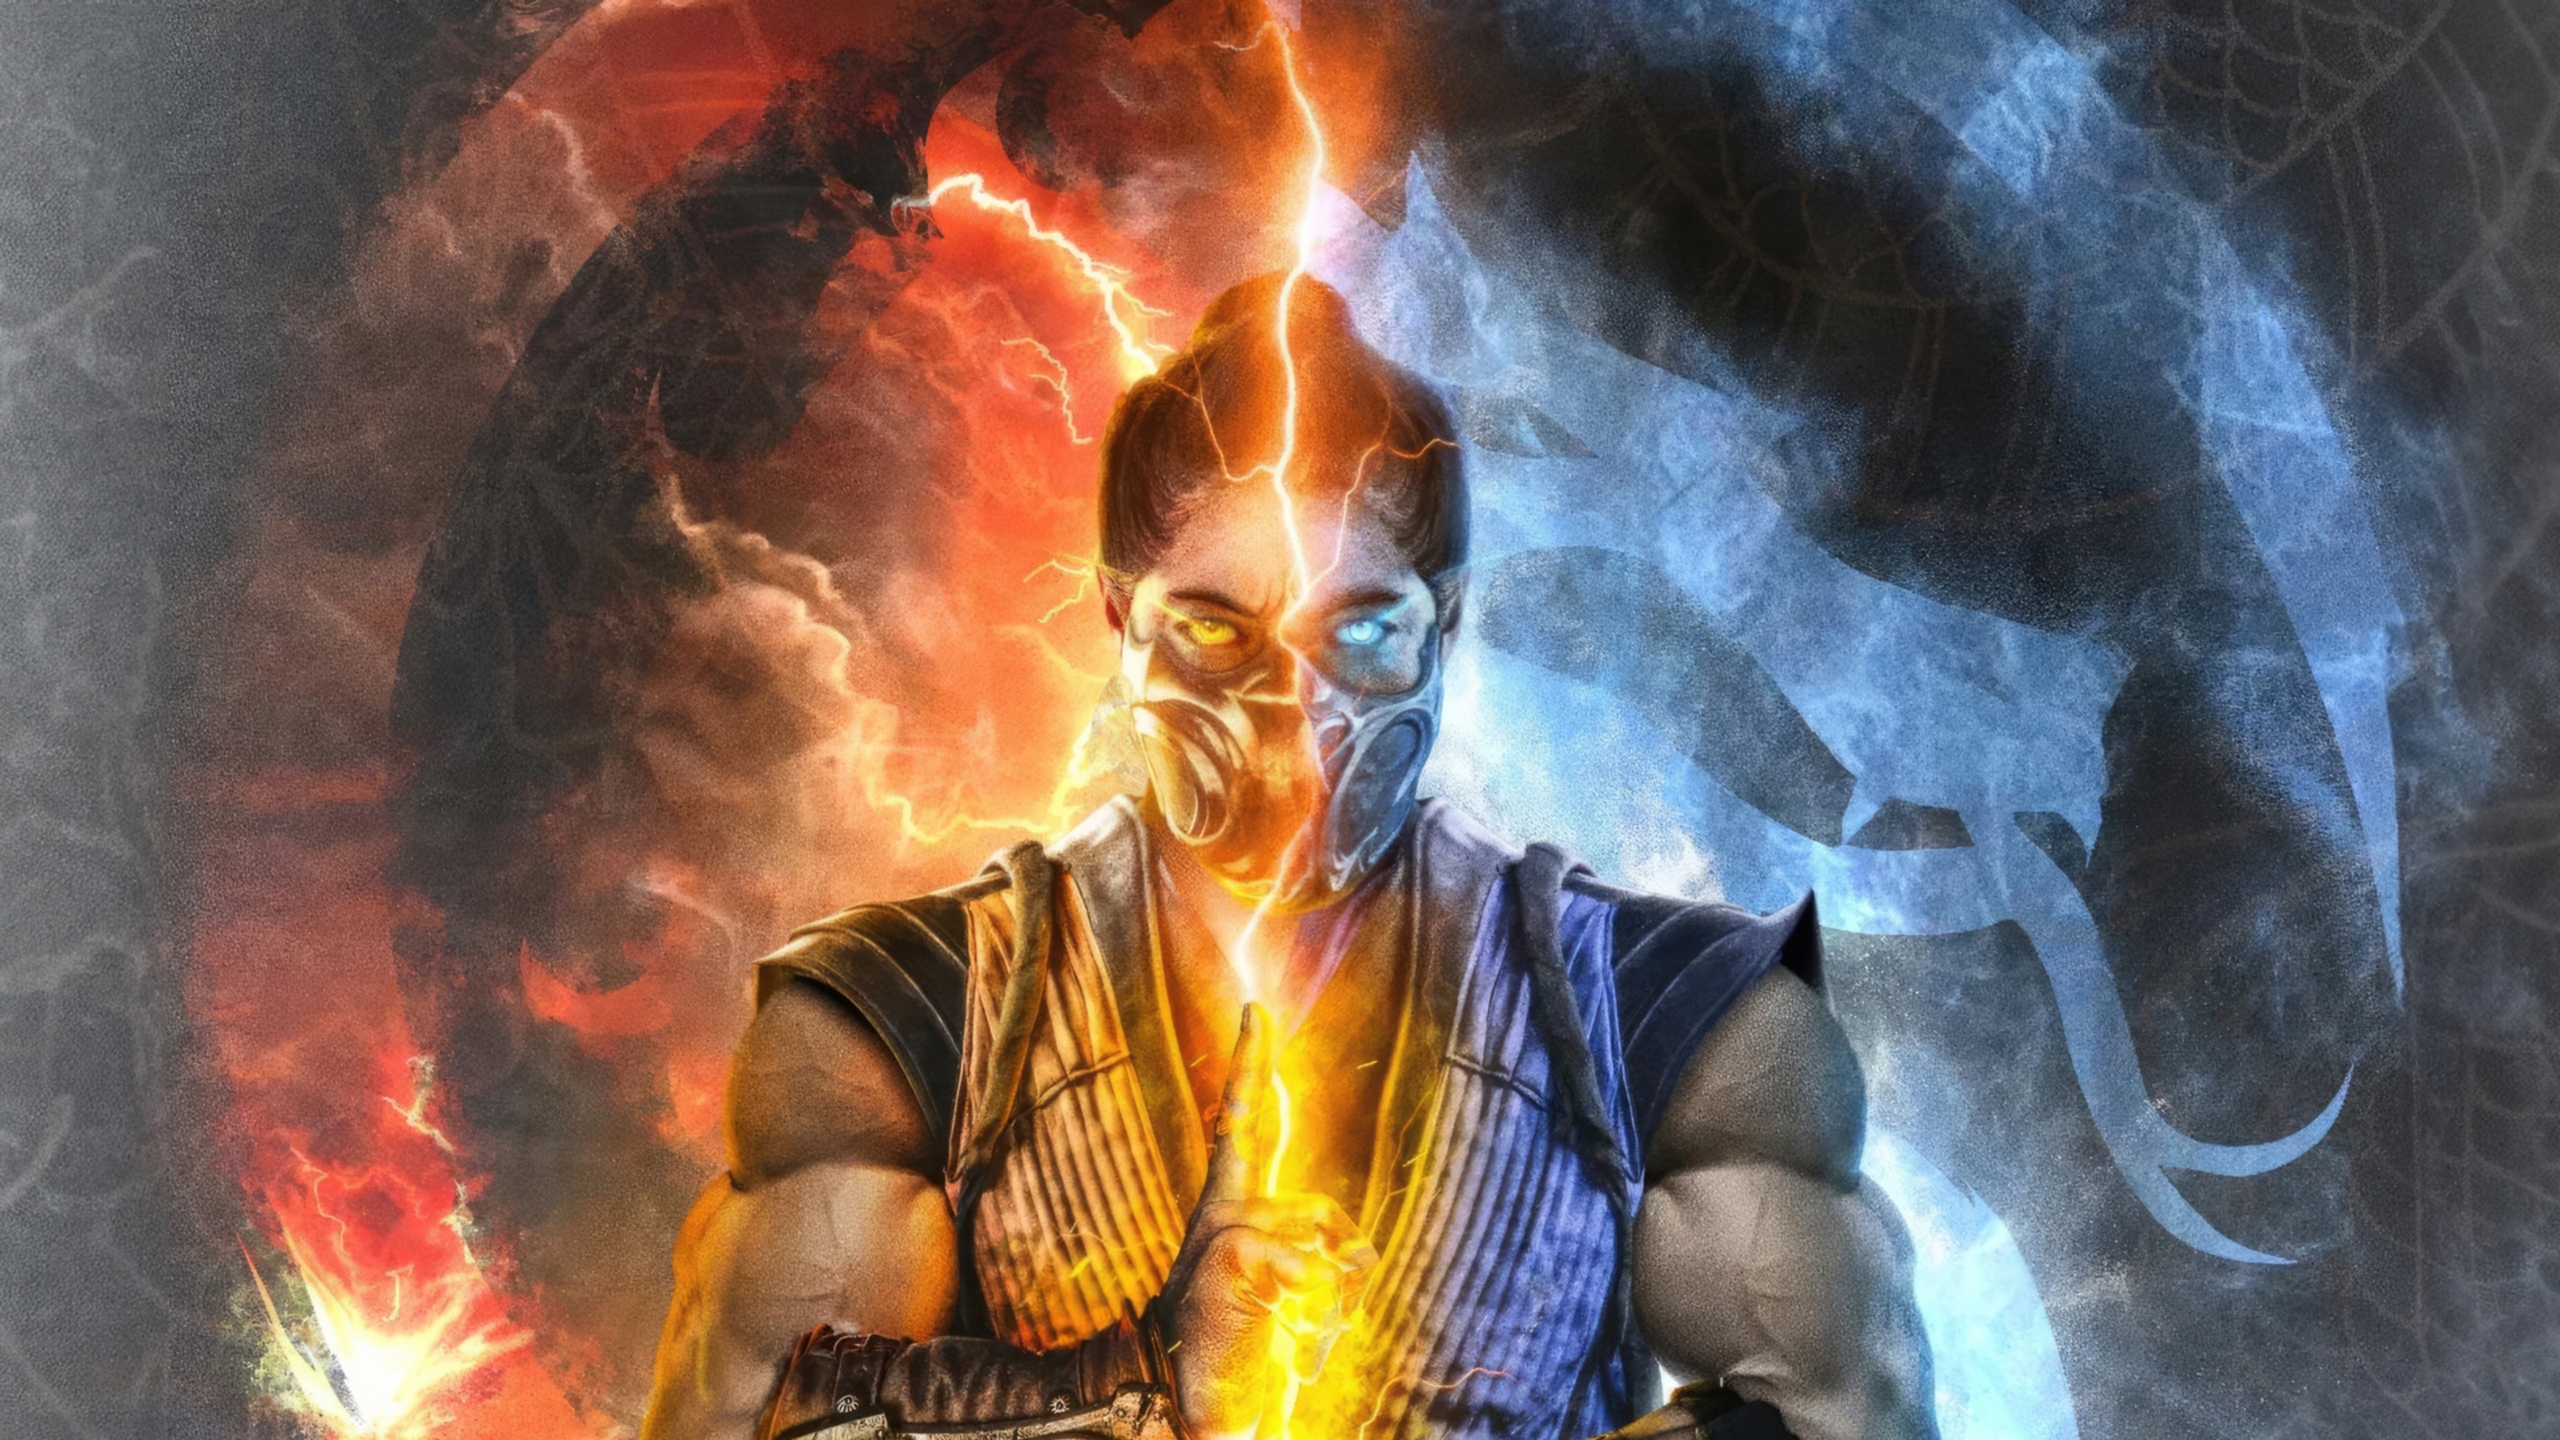 Mortal Kombat Wallpapers - Top Mortal Kombat Backgrounds